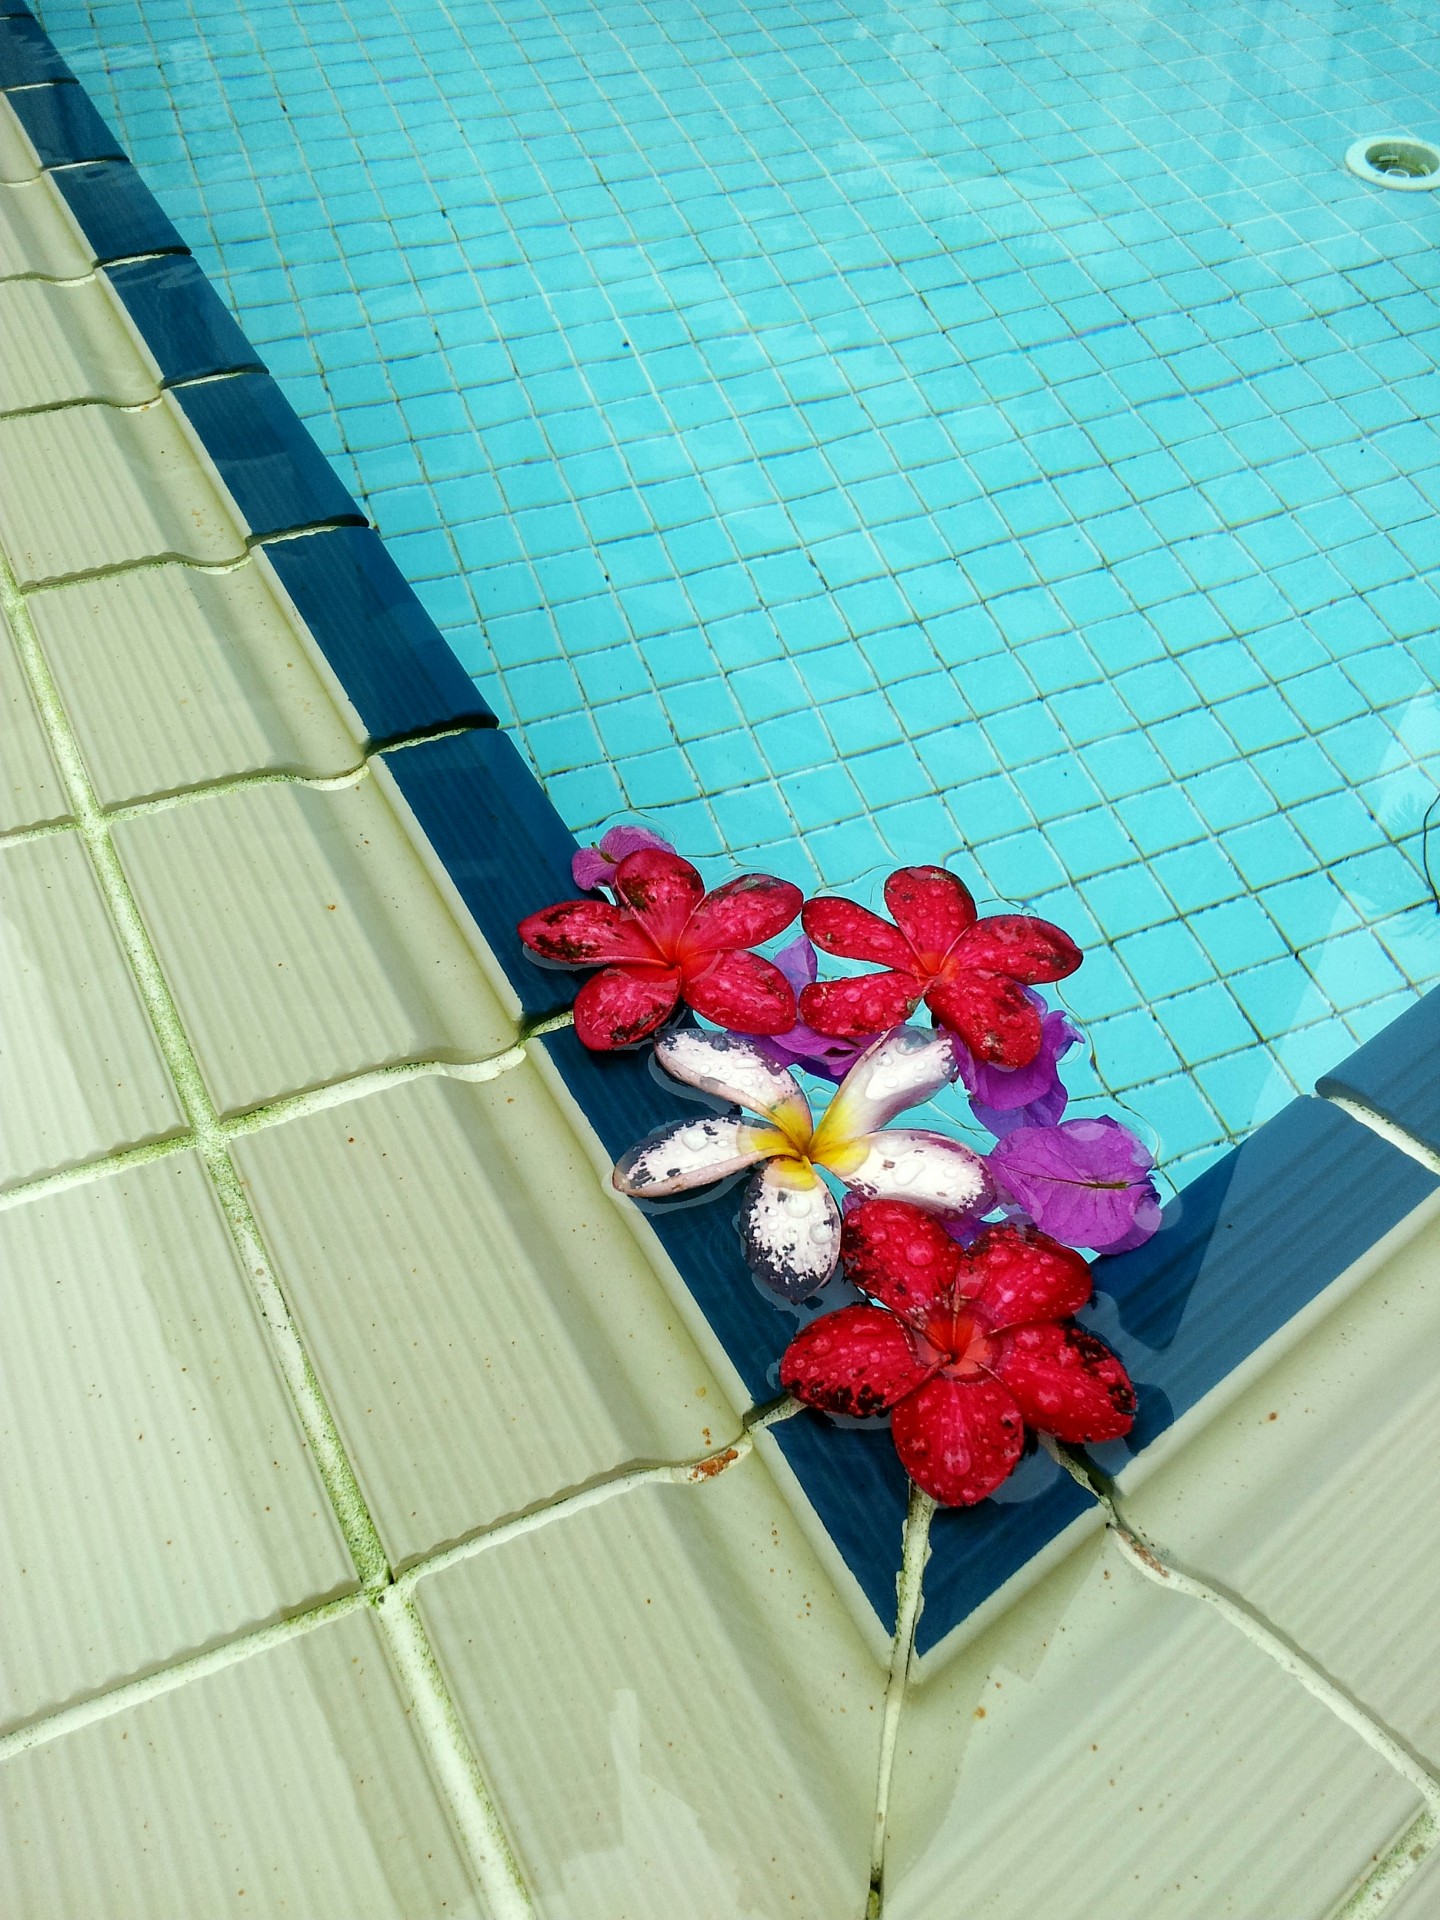 Fallen Flower On The Swimming Pool